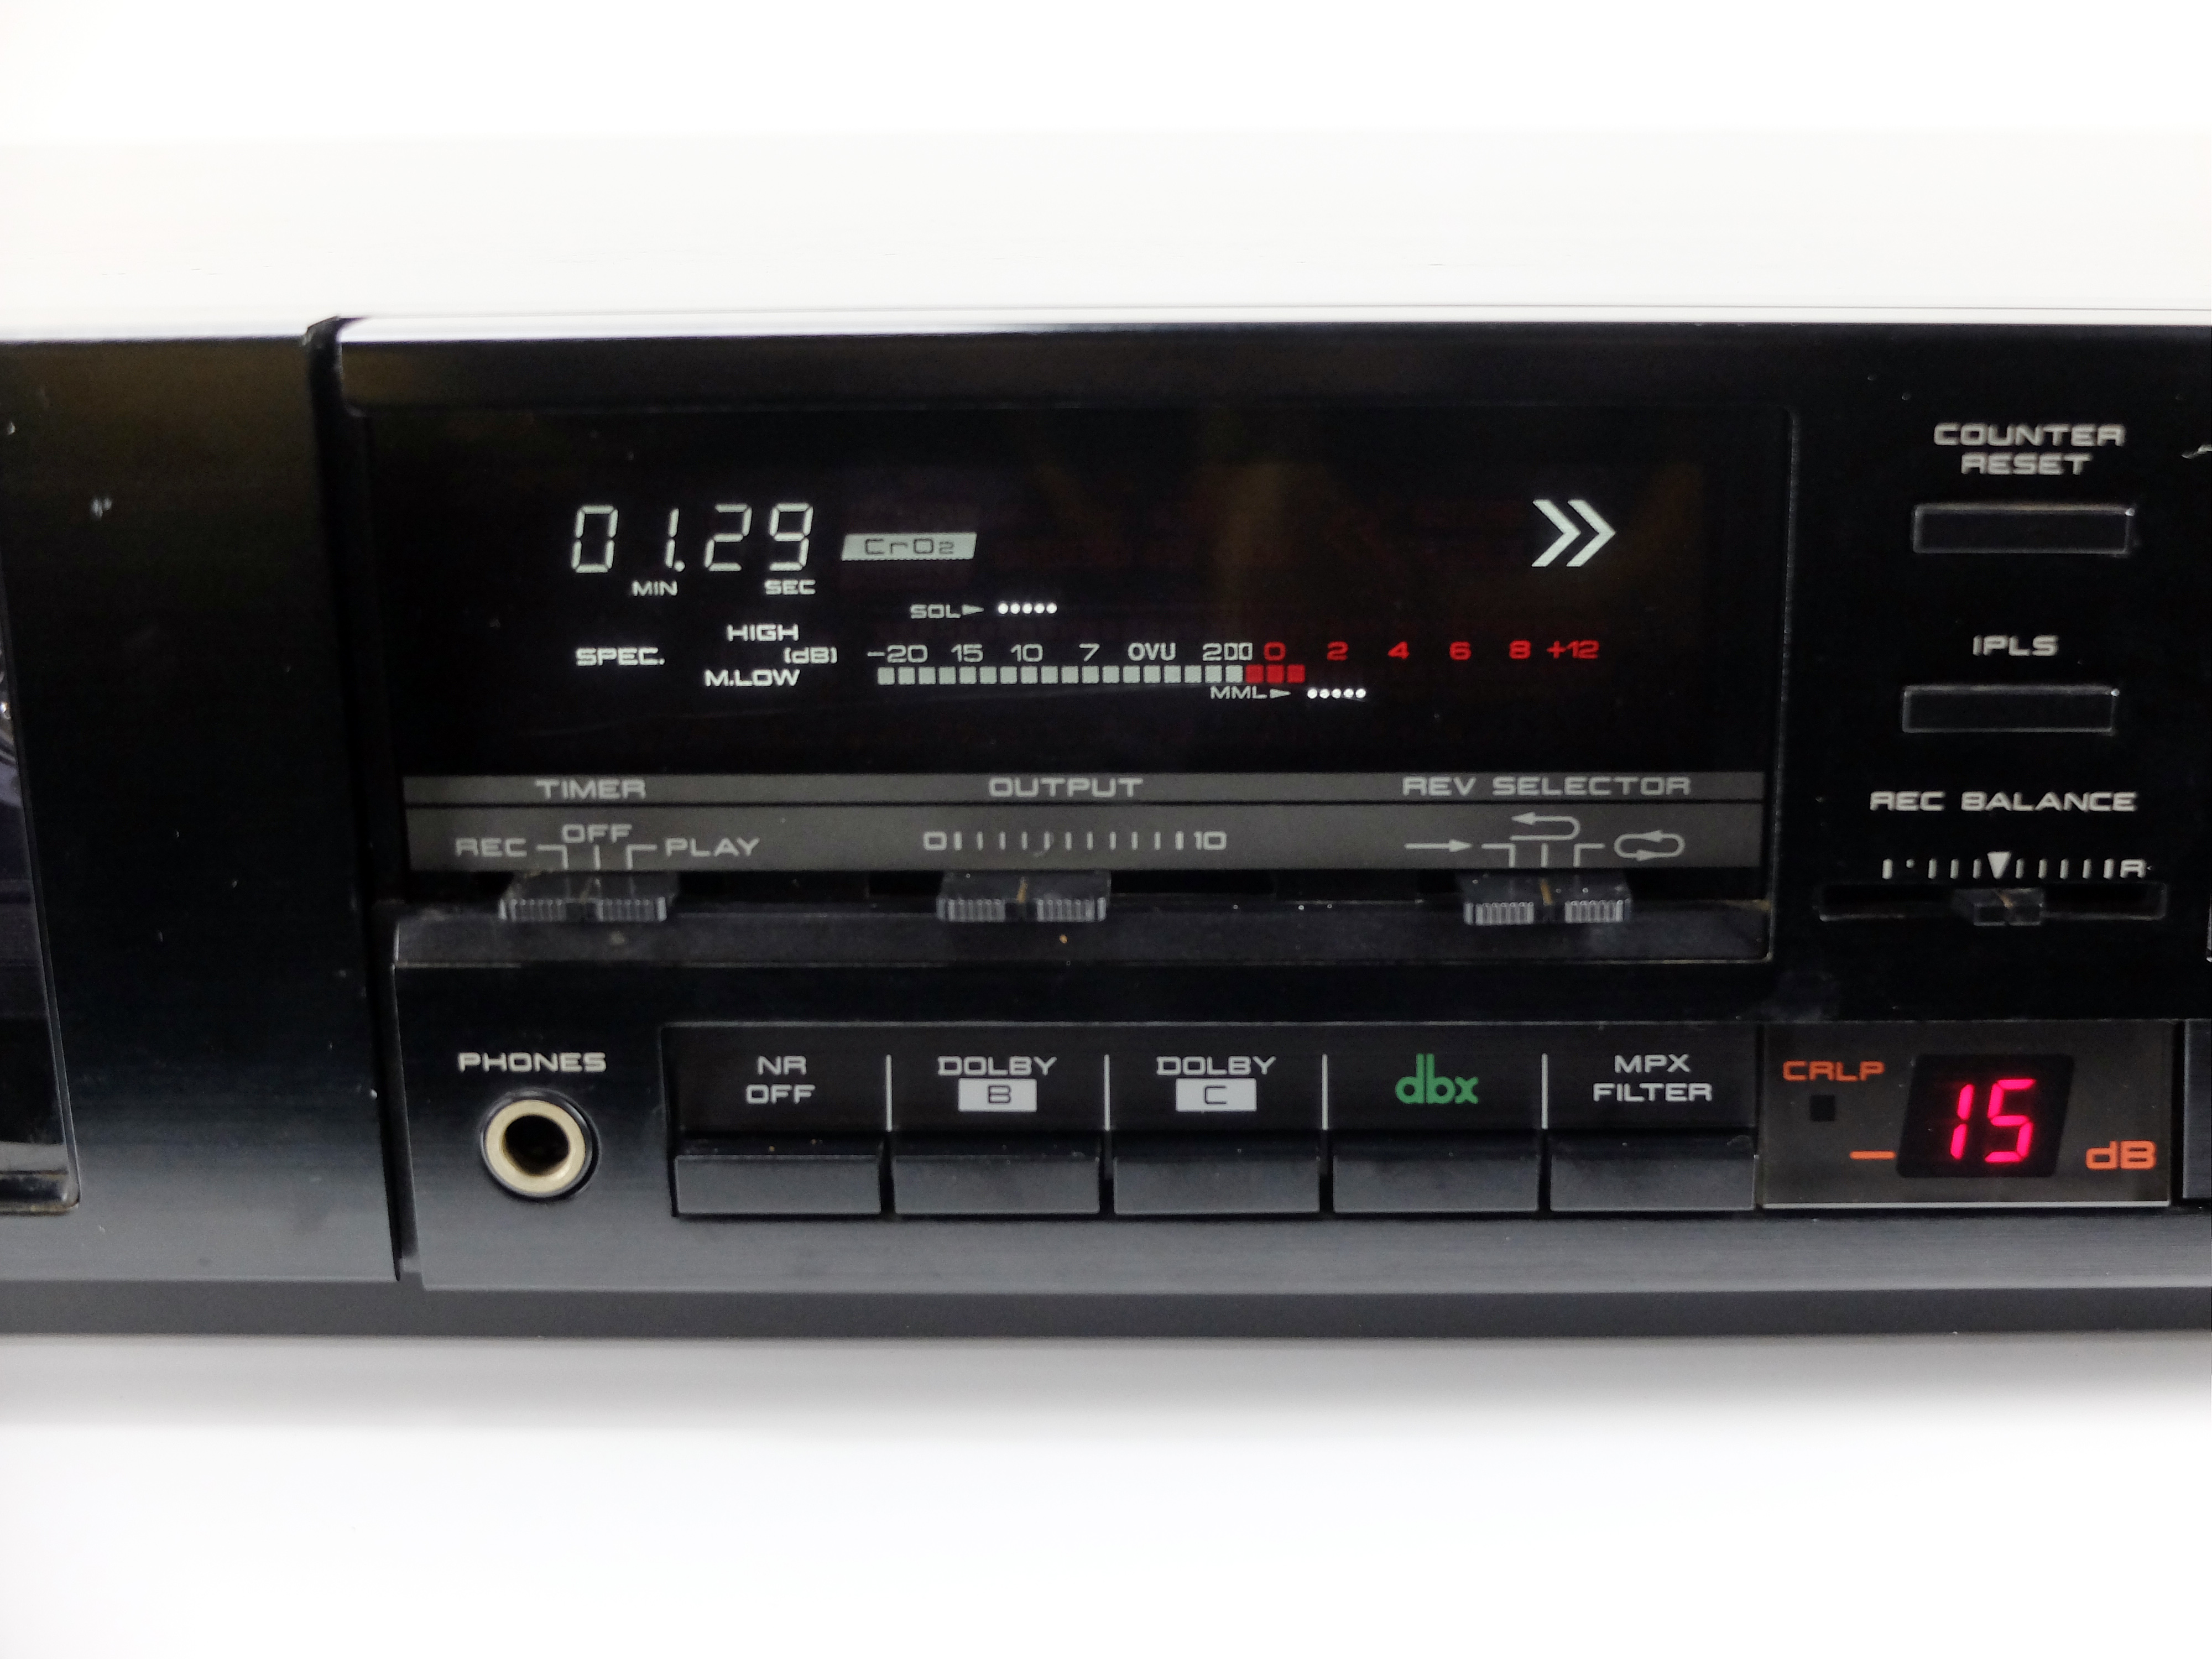 Đầu băng cassette AKAI GX-R70 made in japan